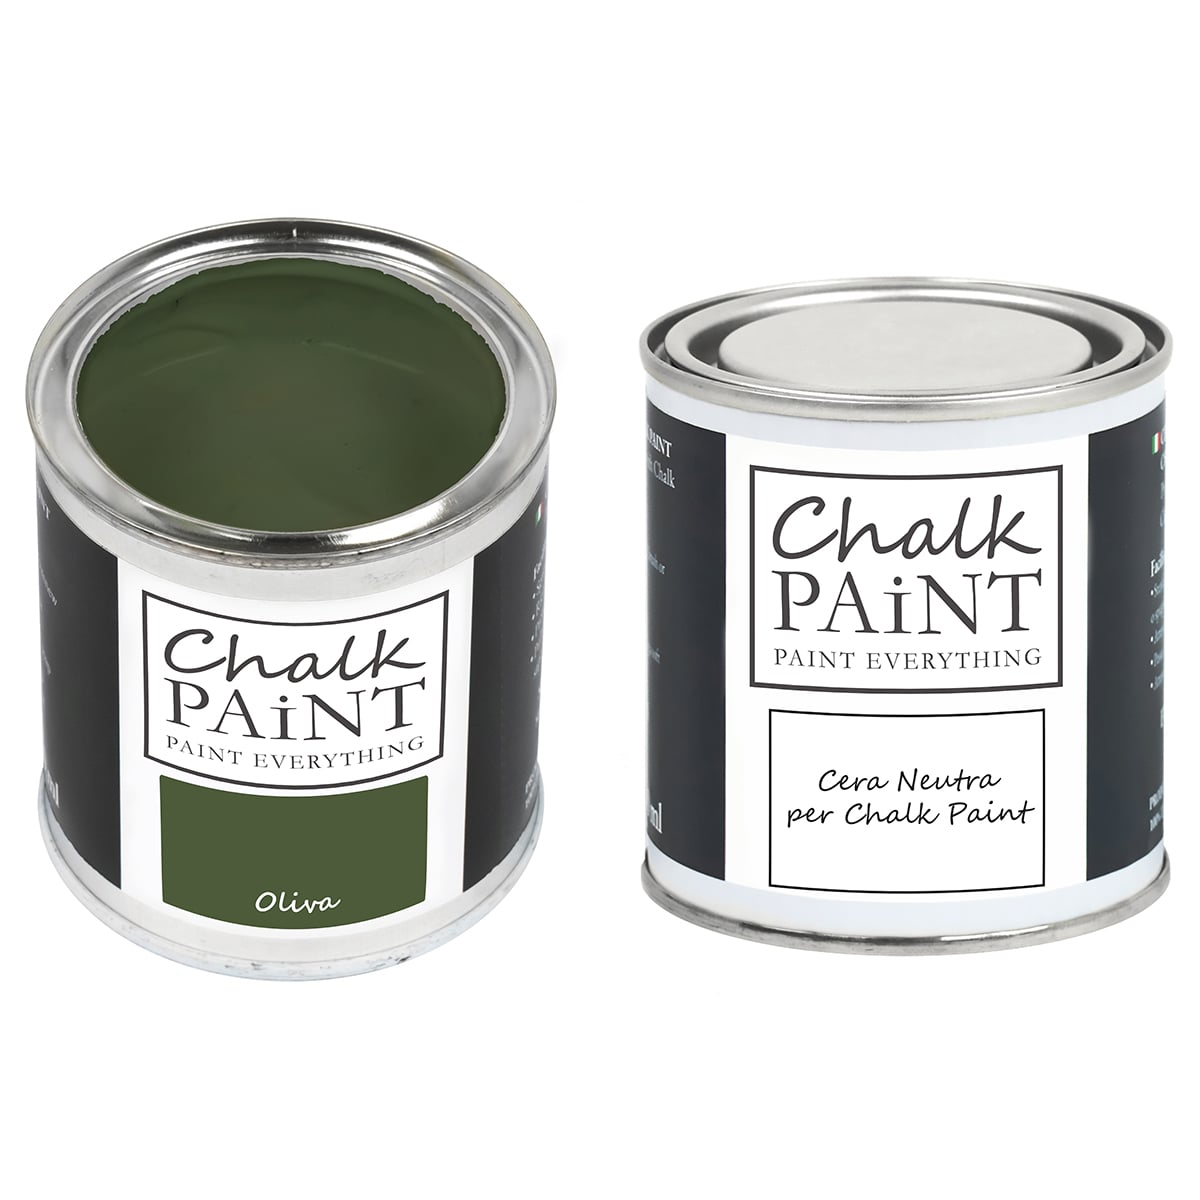 Oliva Chalk paint e cera in offerta decora facile con paint magic